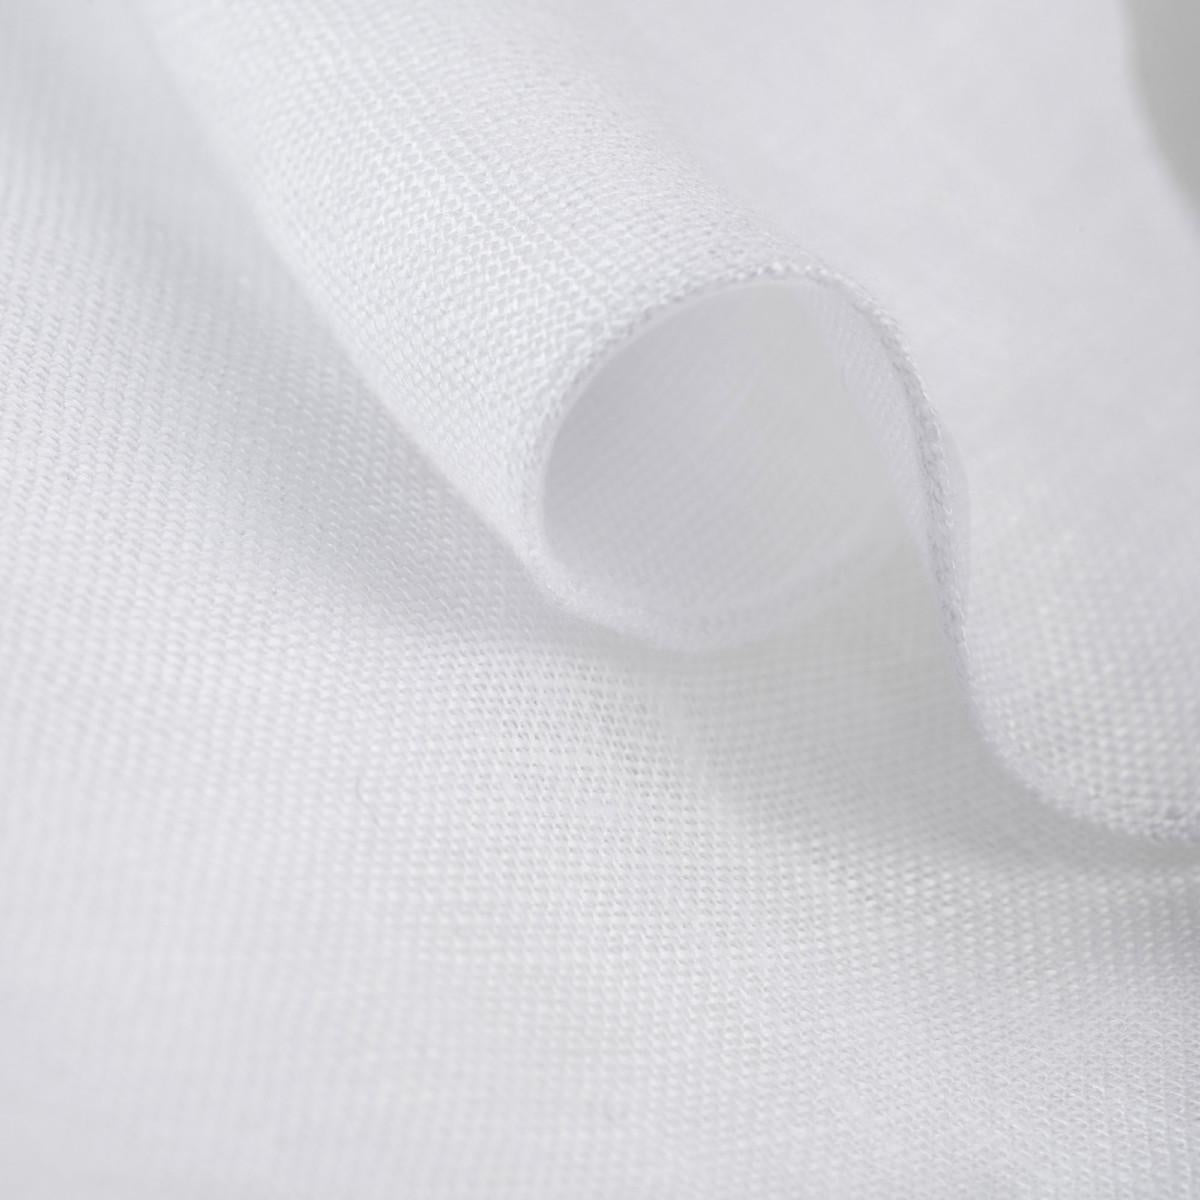 Tuta June 100% Capri white linen jumpsuit detail